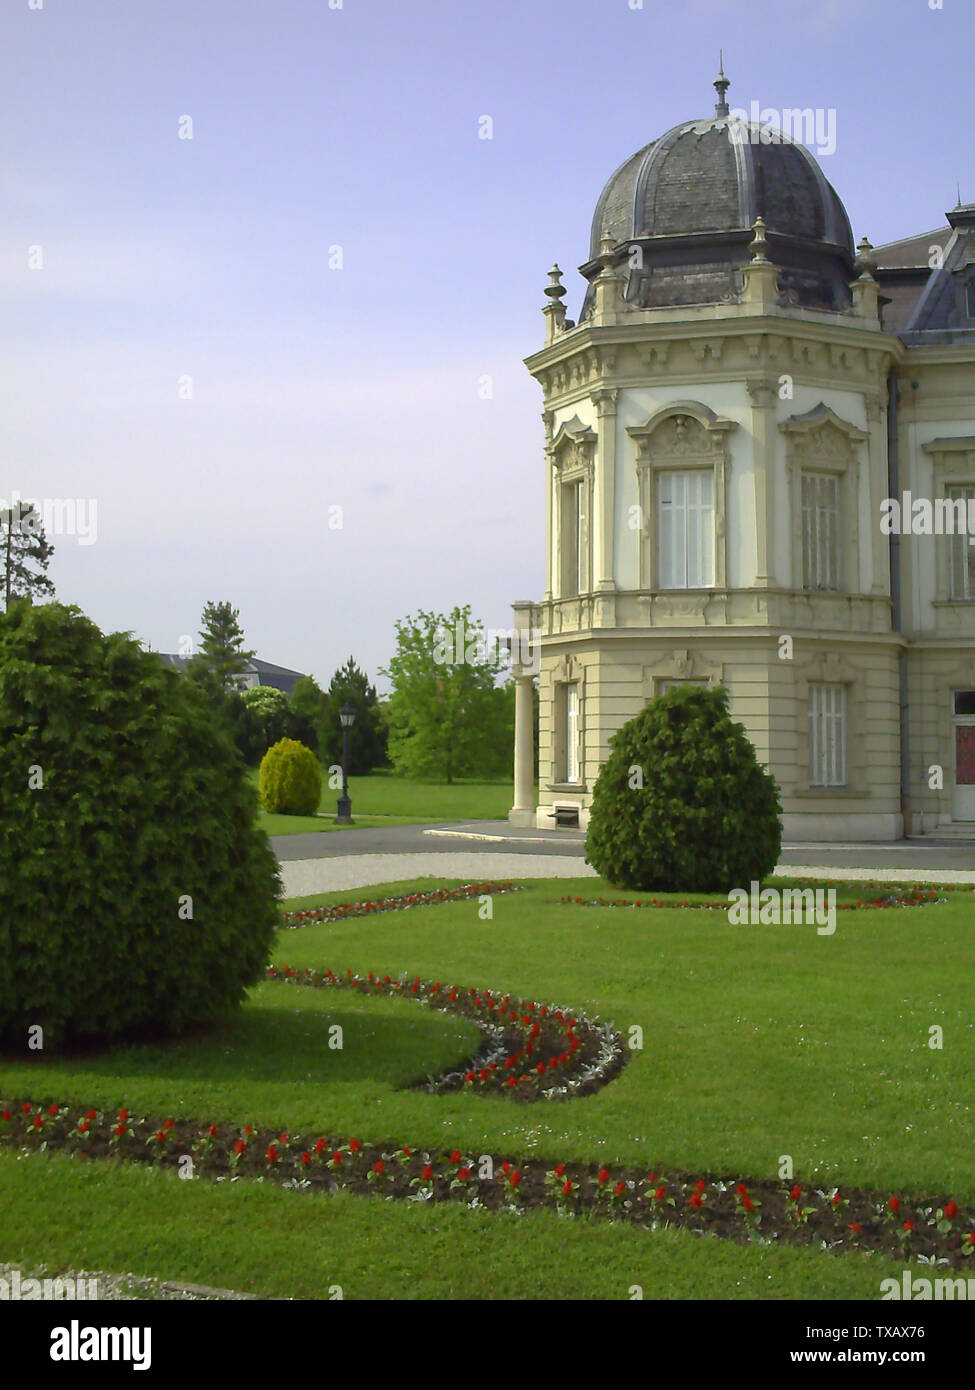 Festetics Palace, Zala county, Hungary. Festetics Palace is one of the most popular landmark in Hungary Stock Photo